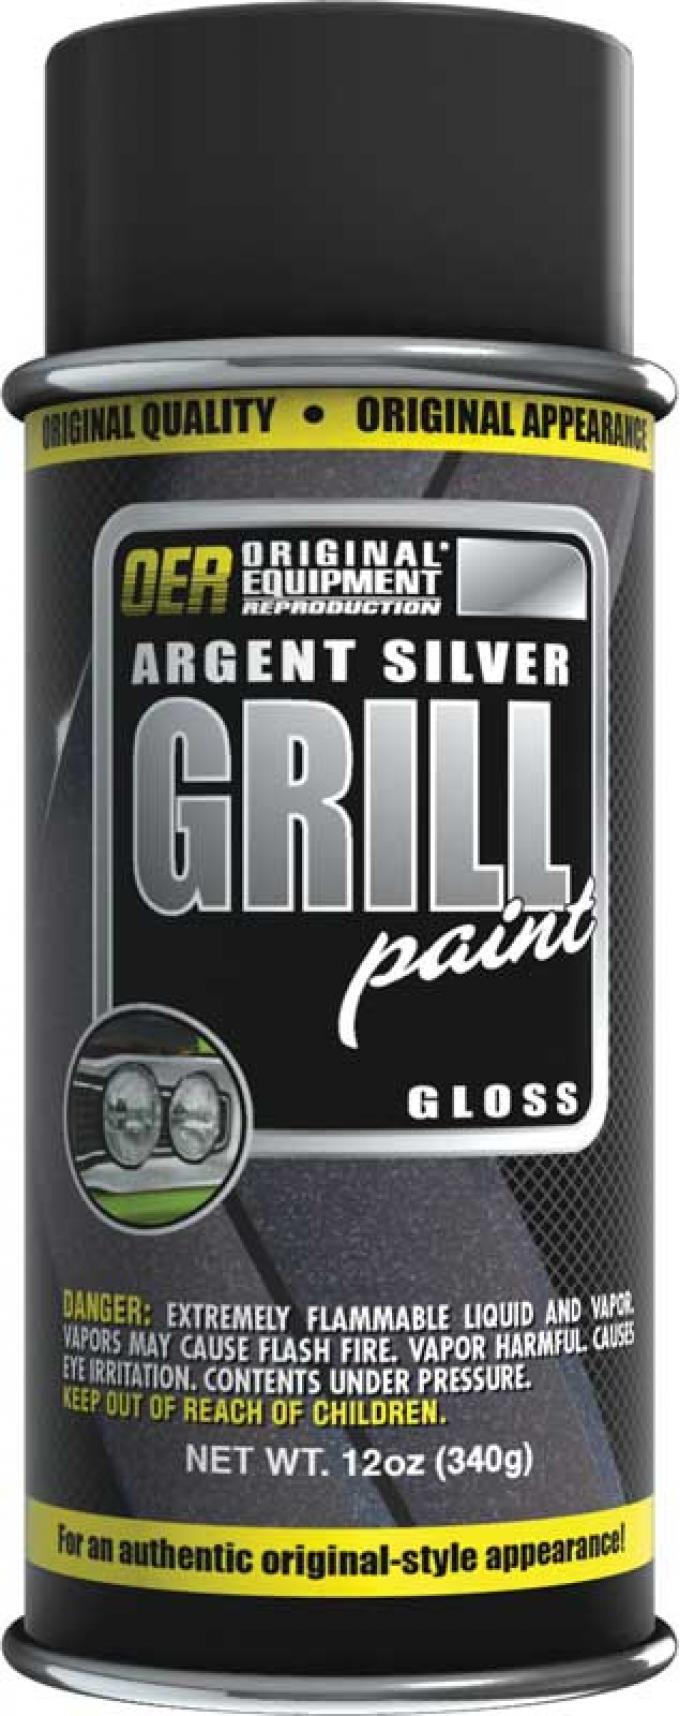 OER 1960-76 Mopar Argent Silver Grill Paint 16 Oz Aerosol Can - Gloss K89184